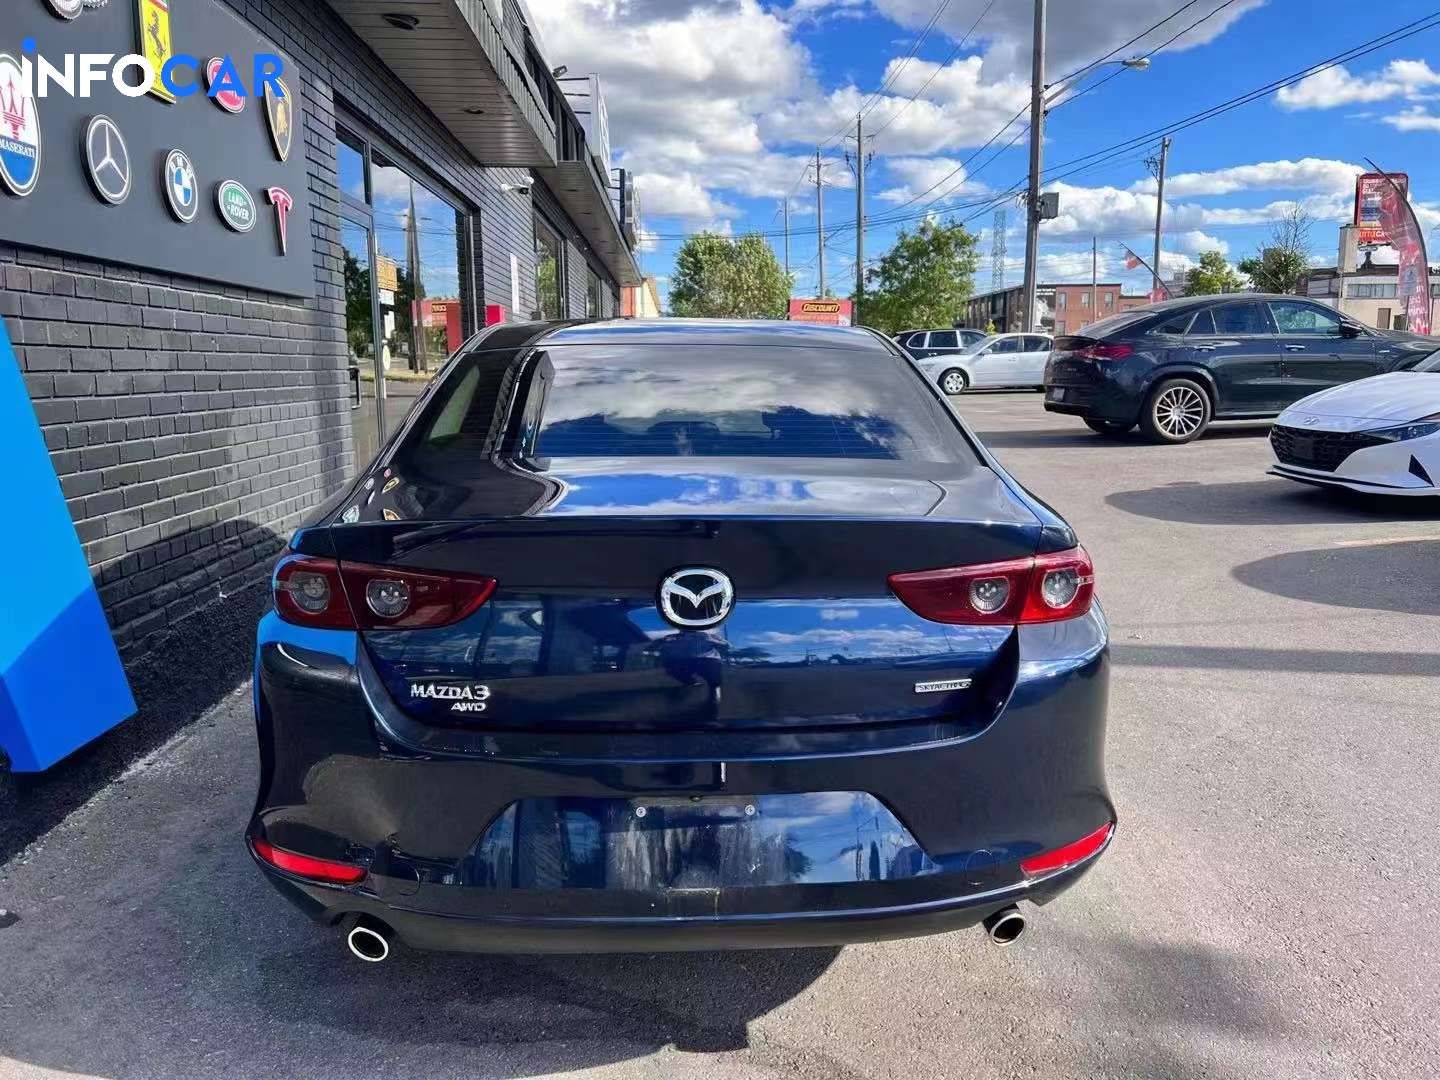 2019 Mazda MAZDA3 GS-AWD - INFOCAR - Toronto Auto Trading Platform